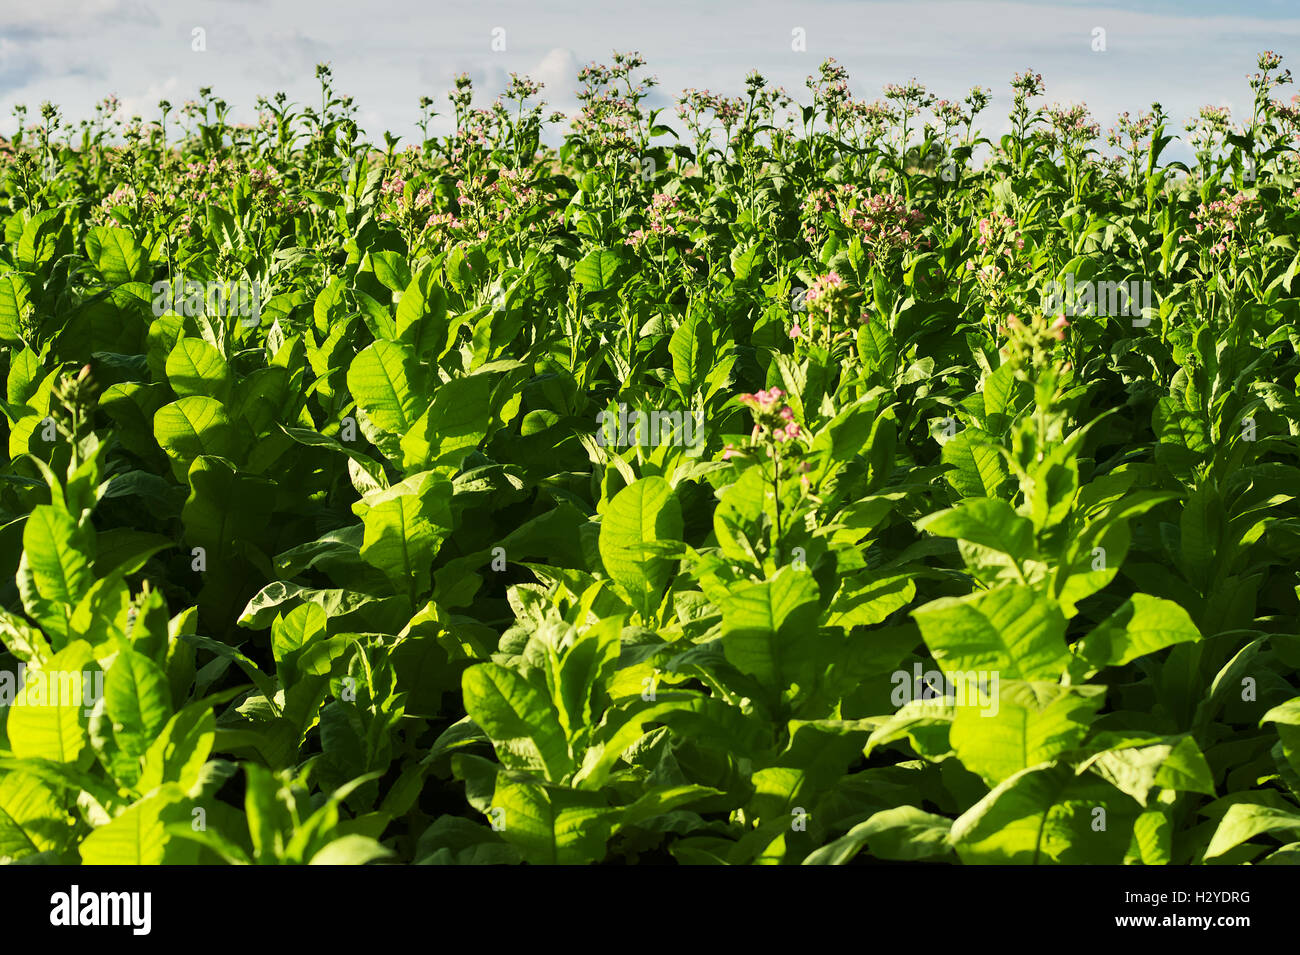 Virginia tobacco (Brightleaf tobacco) plants growing on plantation in Woznawies, Podlaskie province, north-eastern Poland. Stock Photo